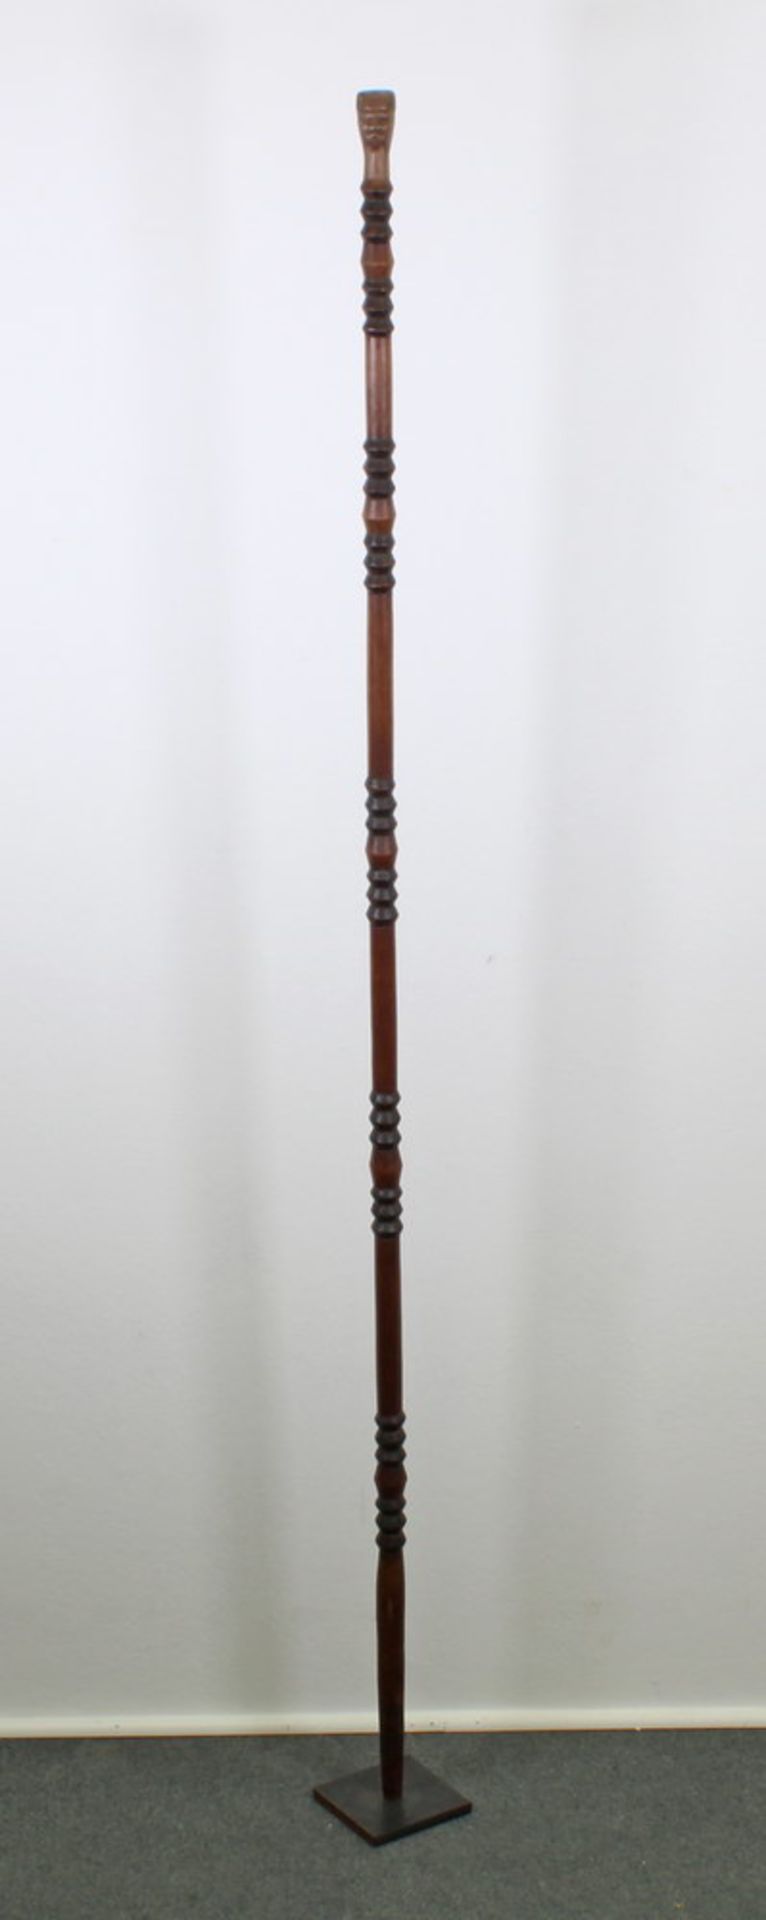 Wanderstab, Hehe, Tansania, Afrika, 20. Jh., authentisch, Holz, 144 cm hoch. Provenienz: